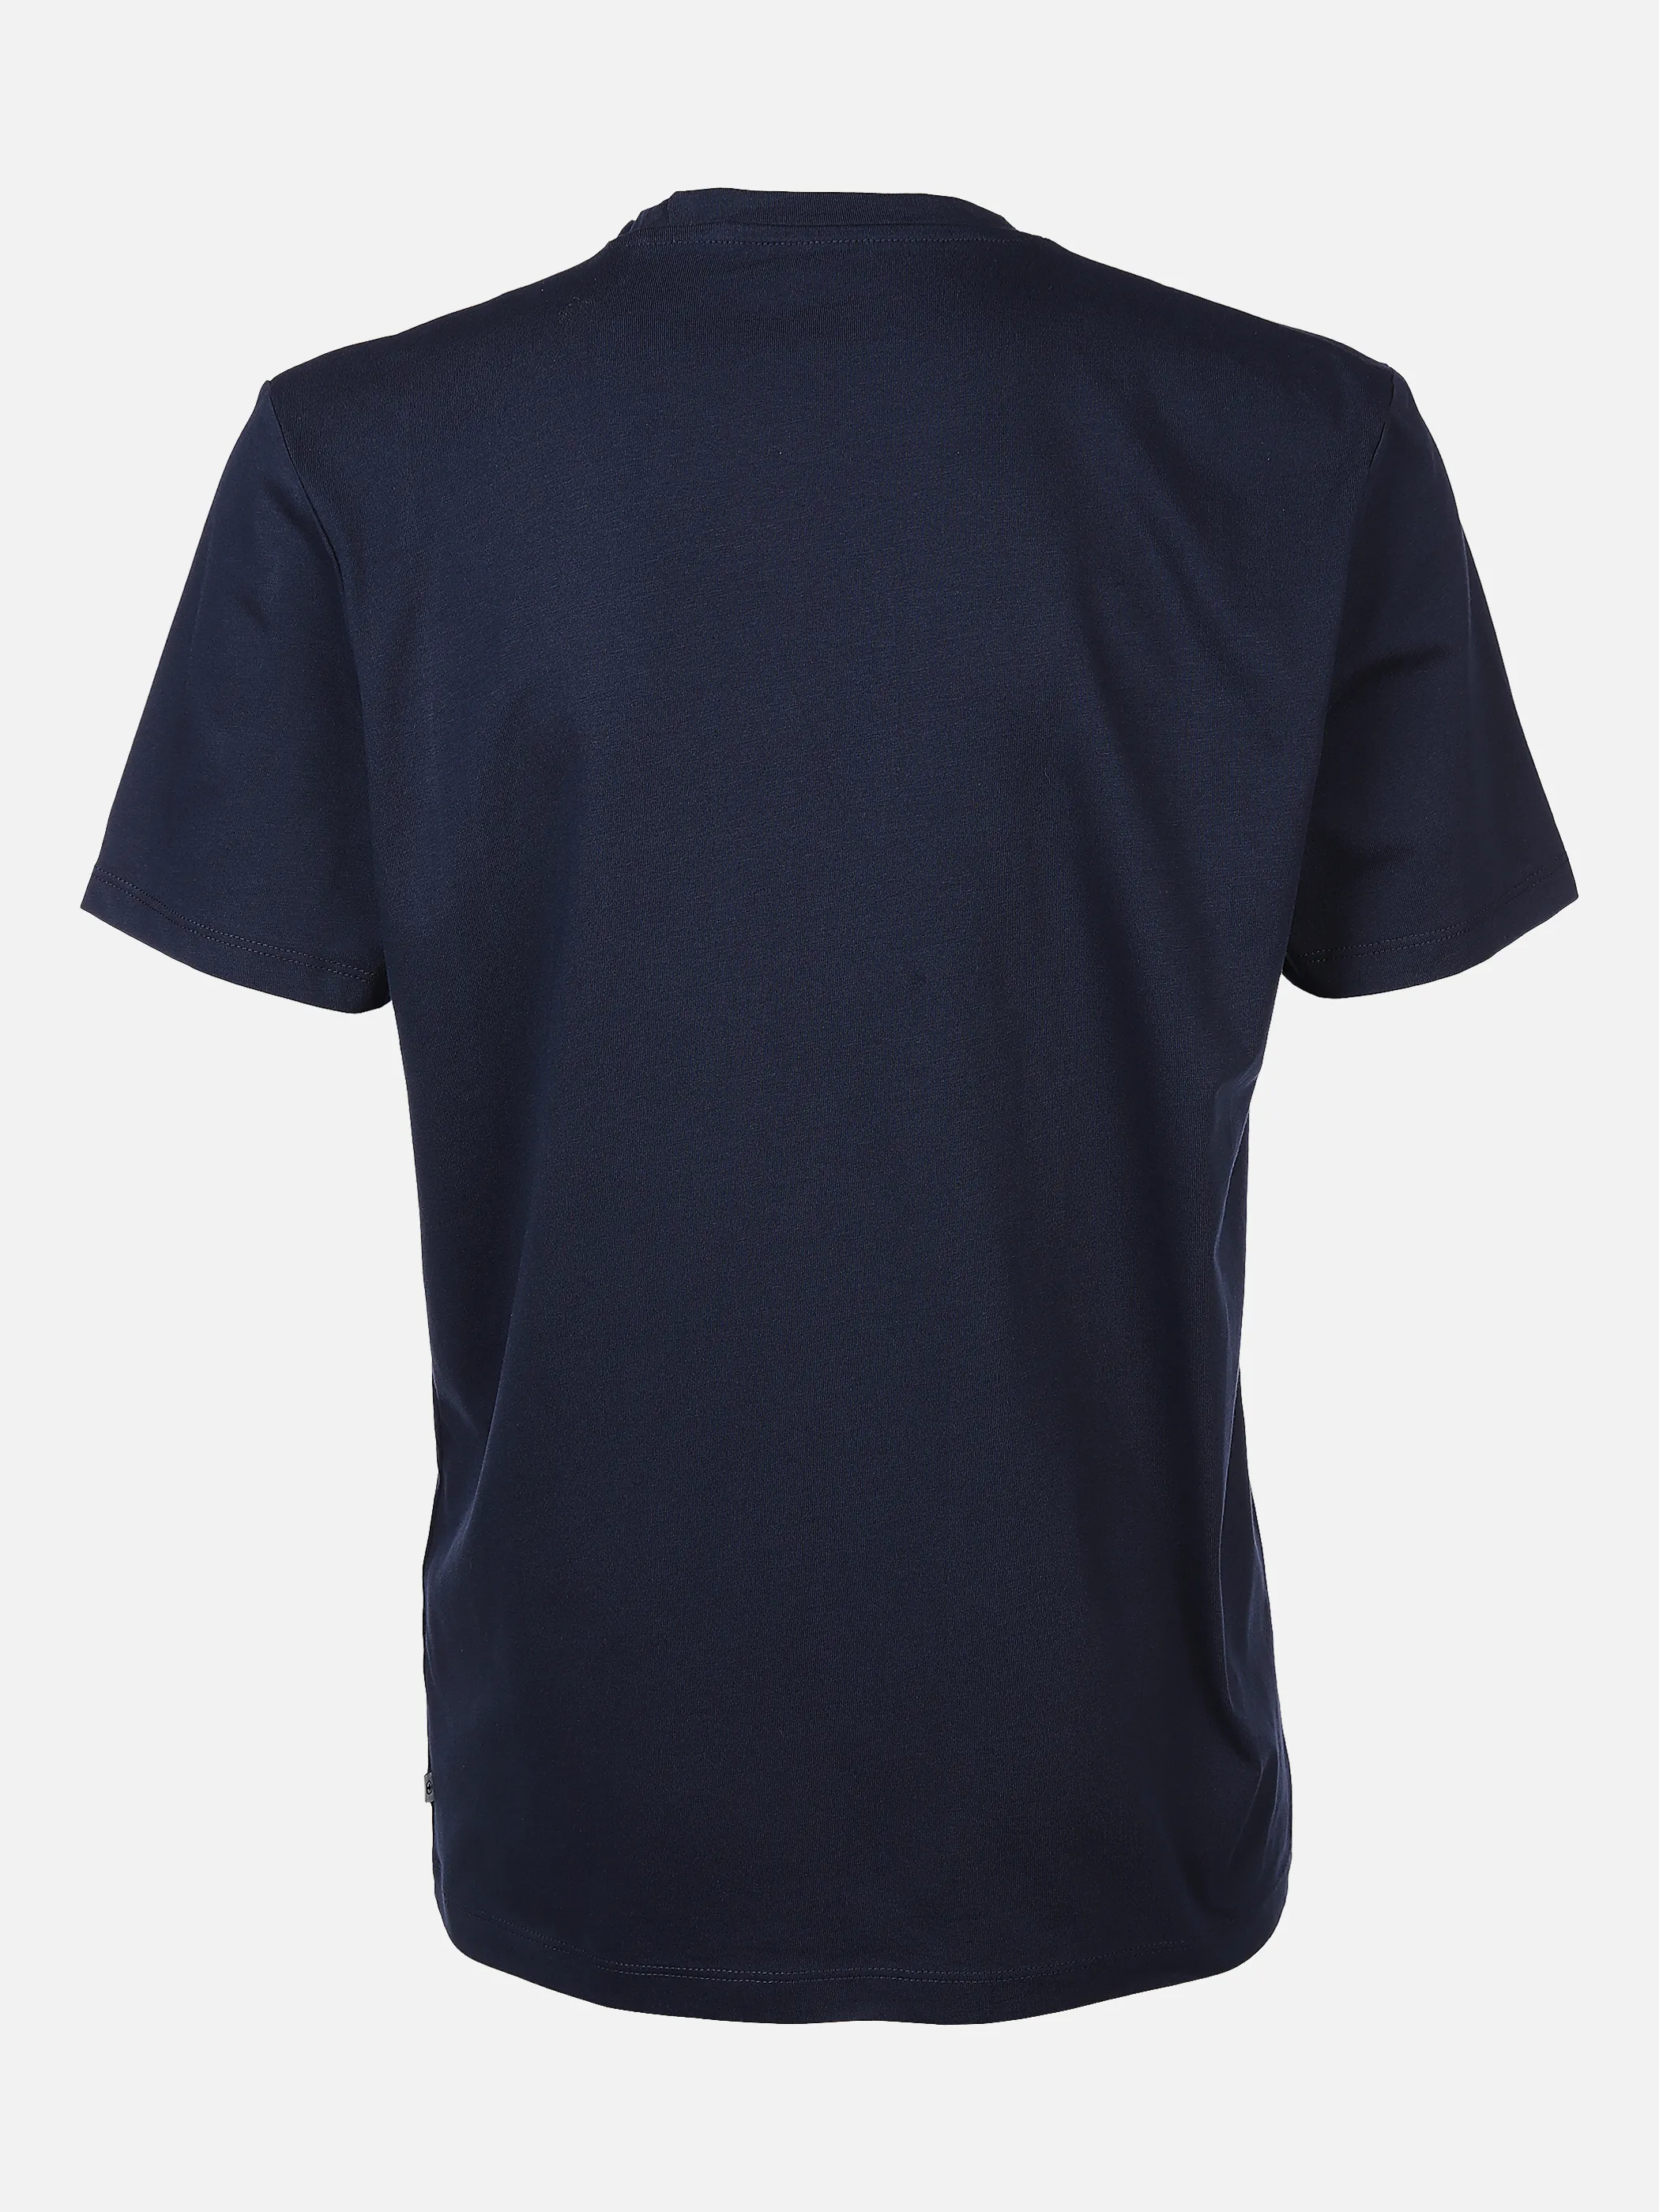 Tom Tailor 1030053 coolmax t-shirt Blau 862563 10668 2